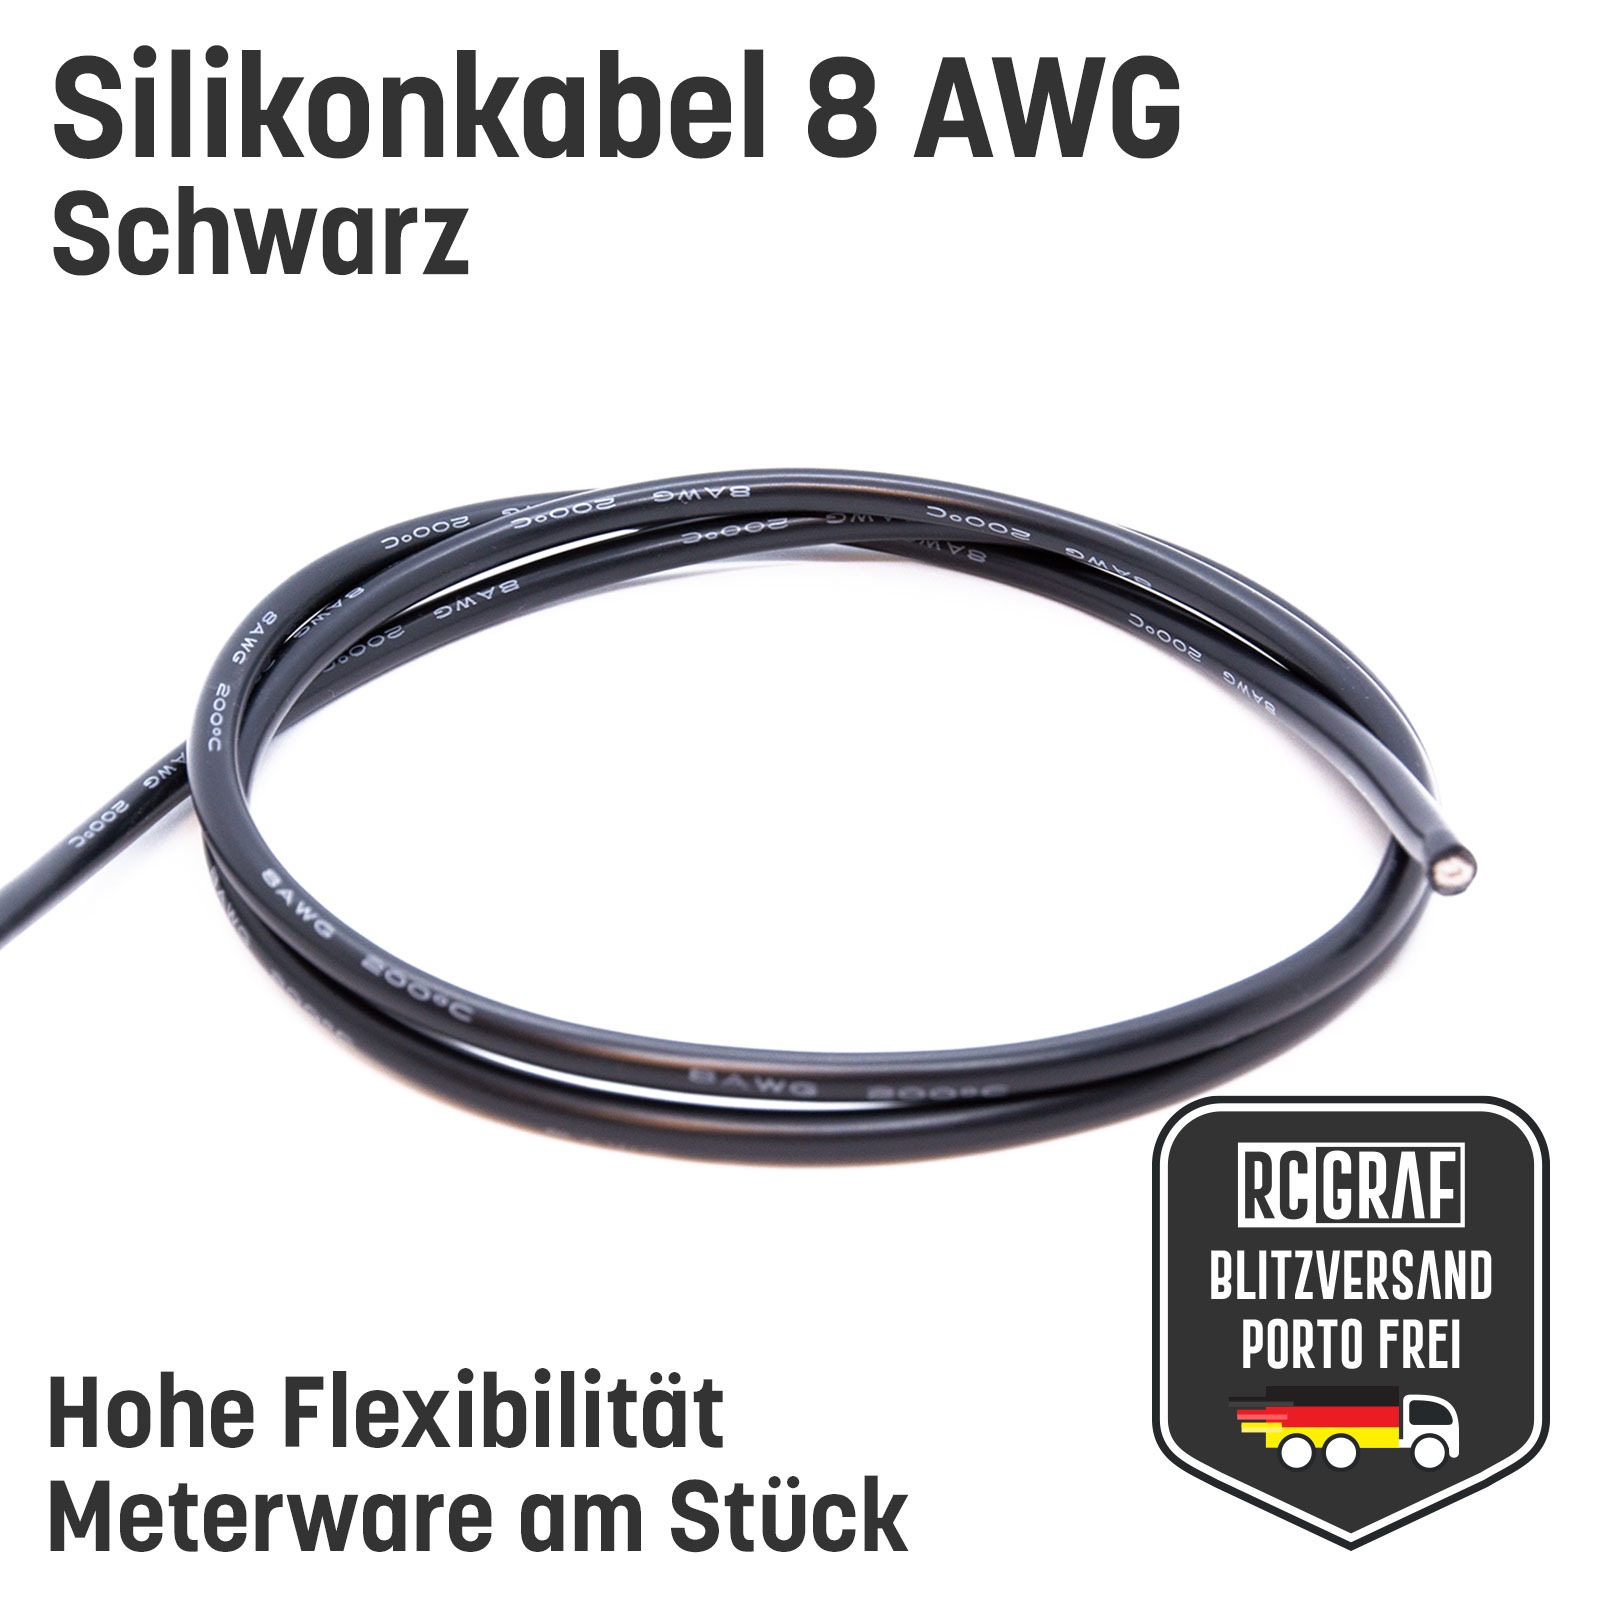 Silikonkabel 8 AWG hochflexibel Rot Schwarz Kupfer RC Kabel